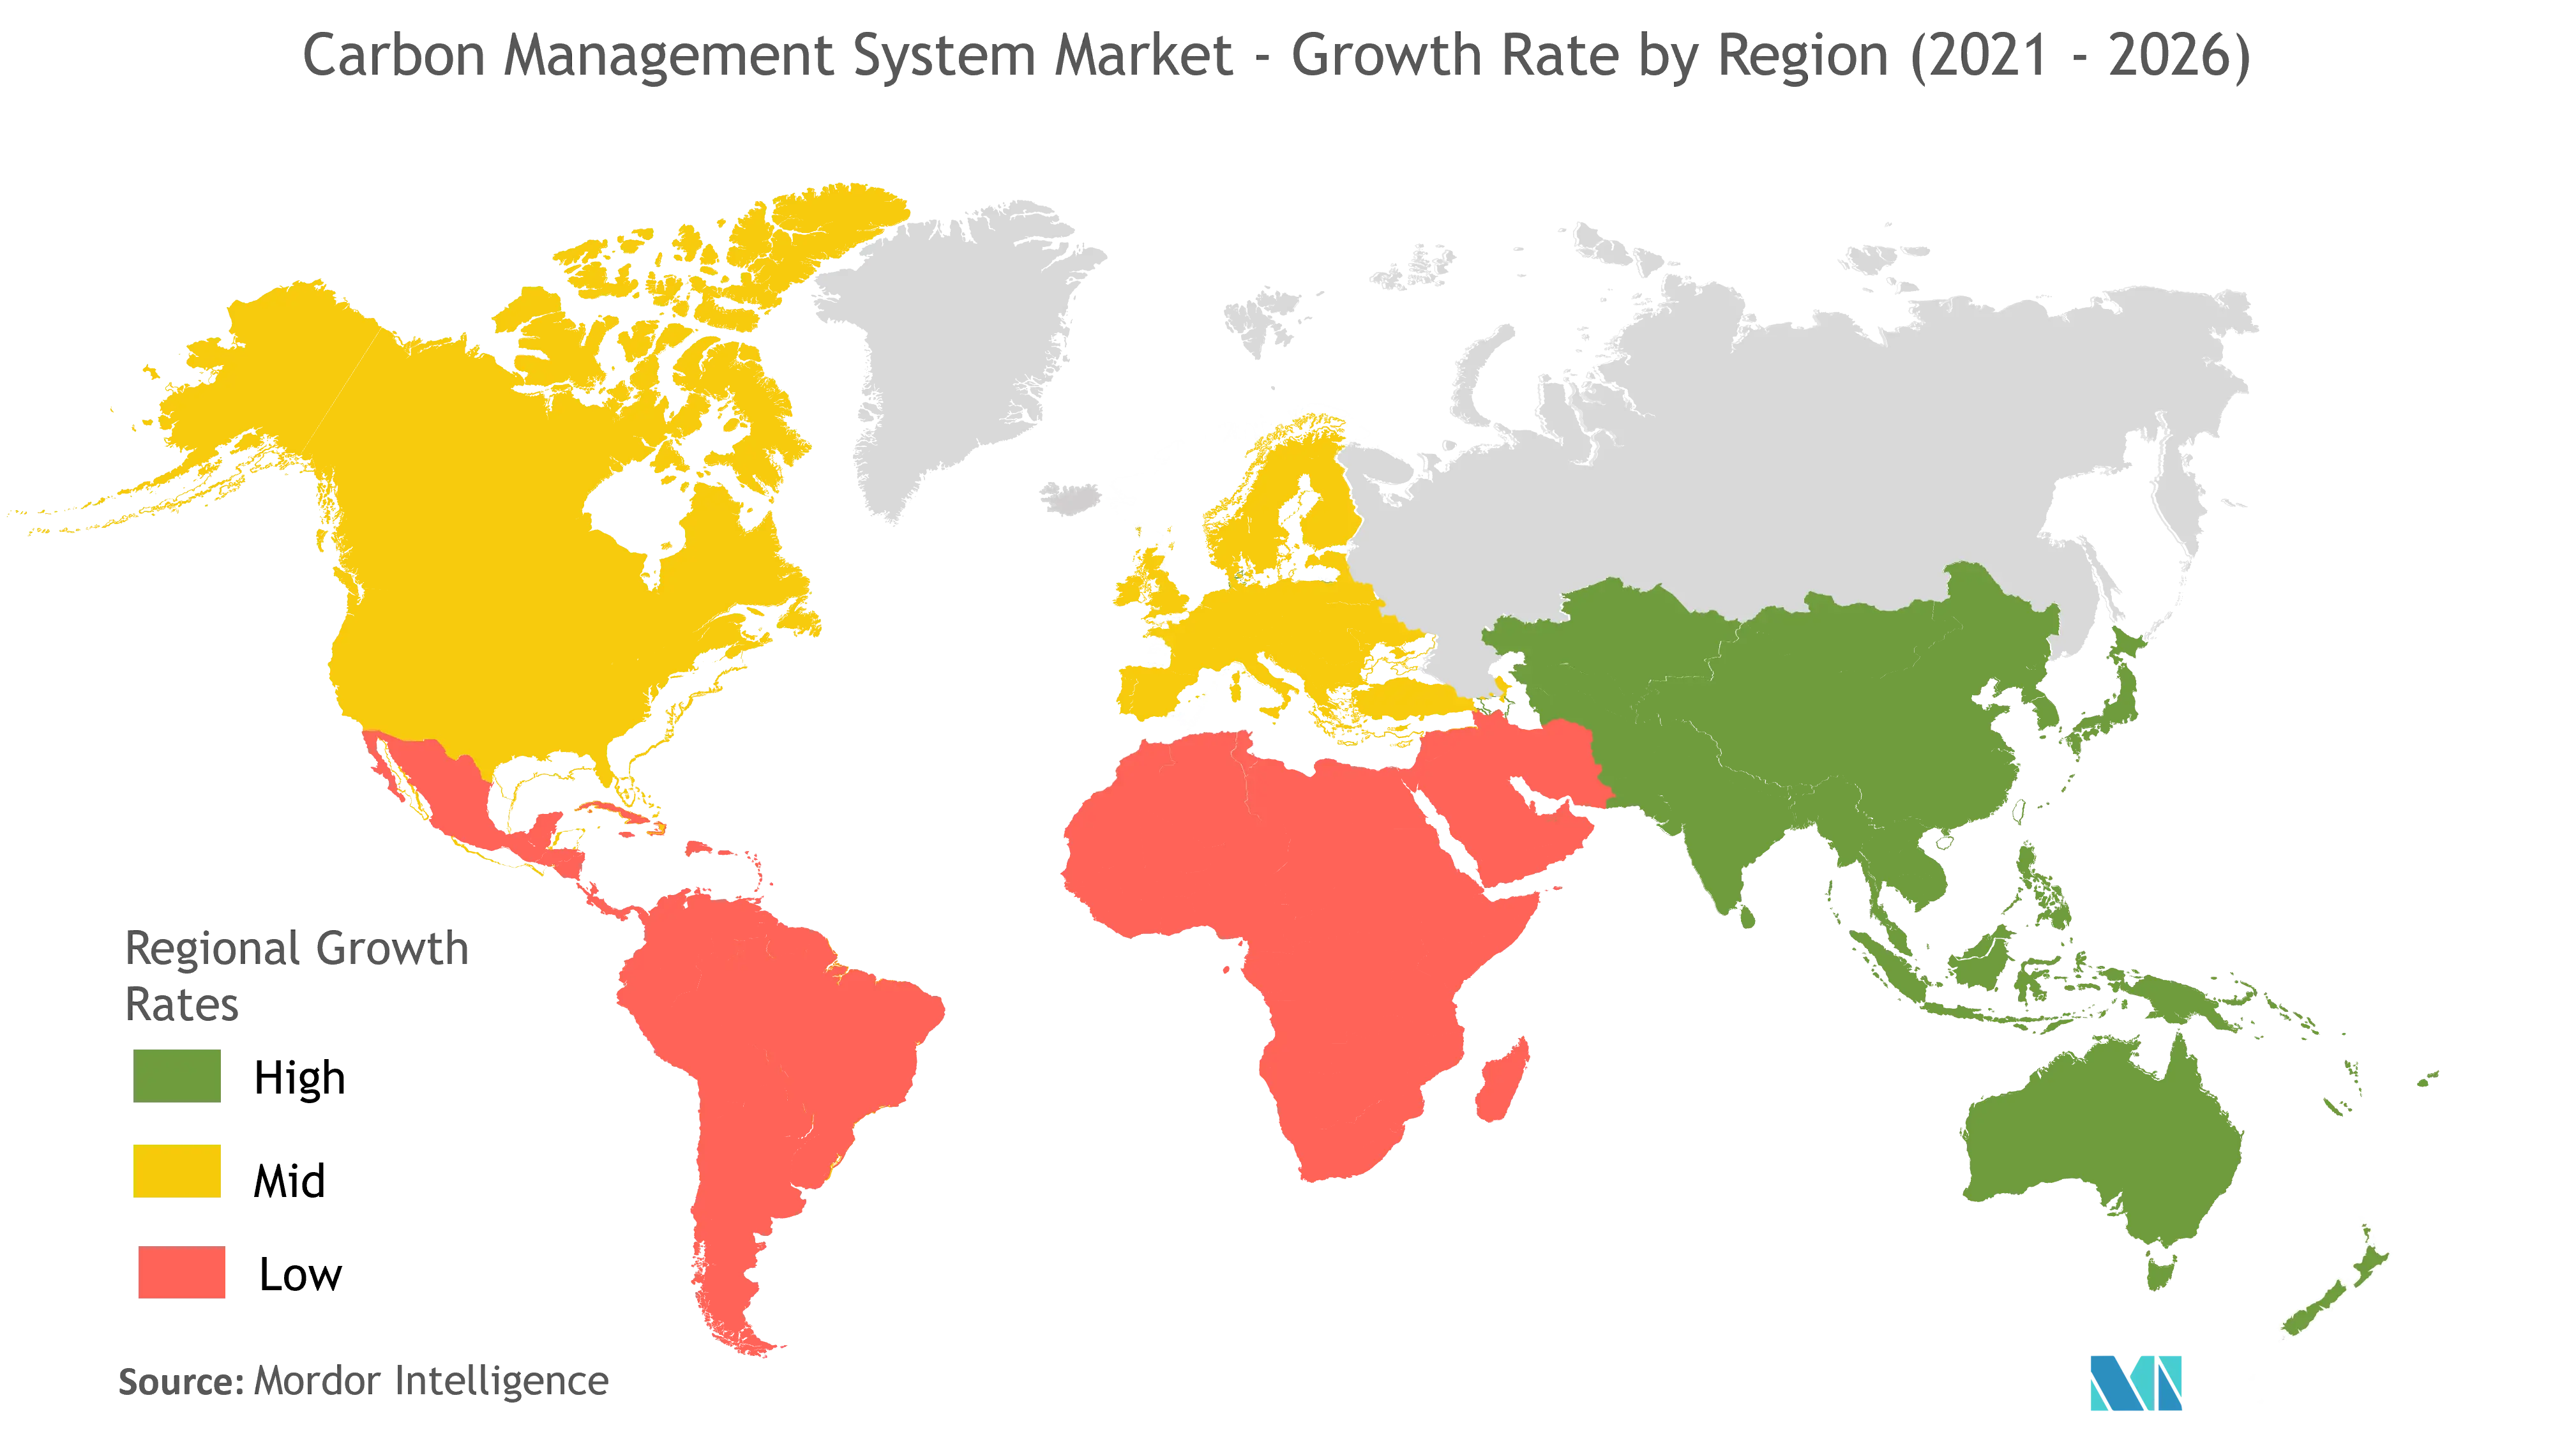 Carbon Management Software Market Growth Rate